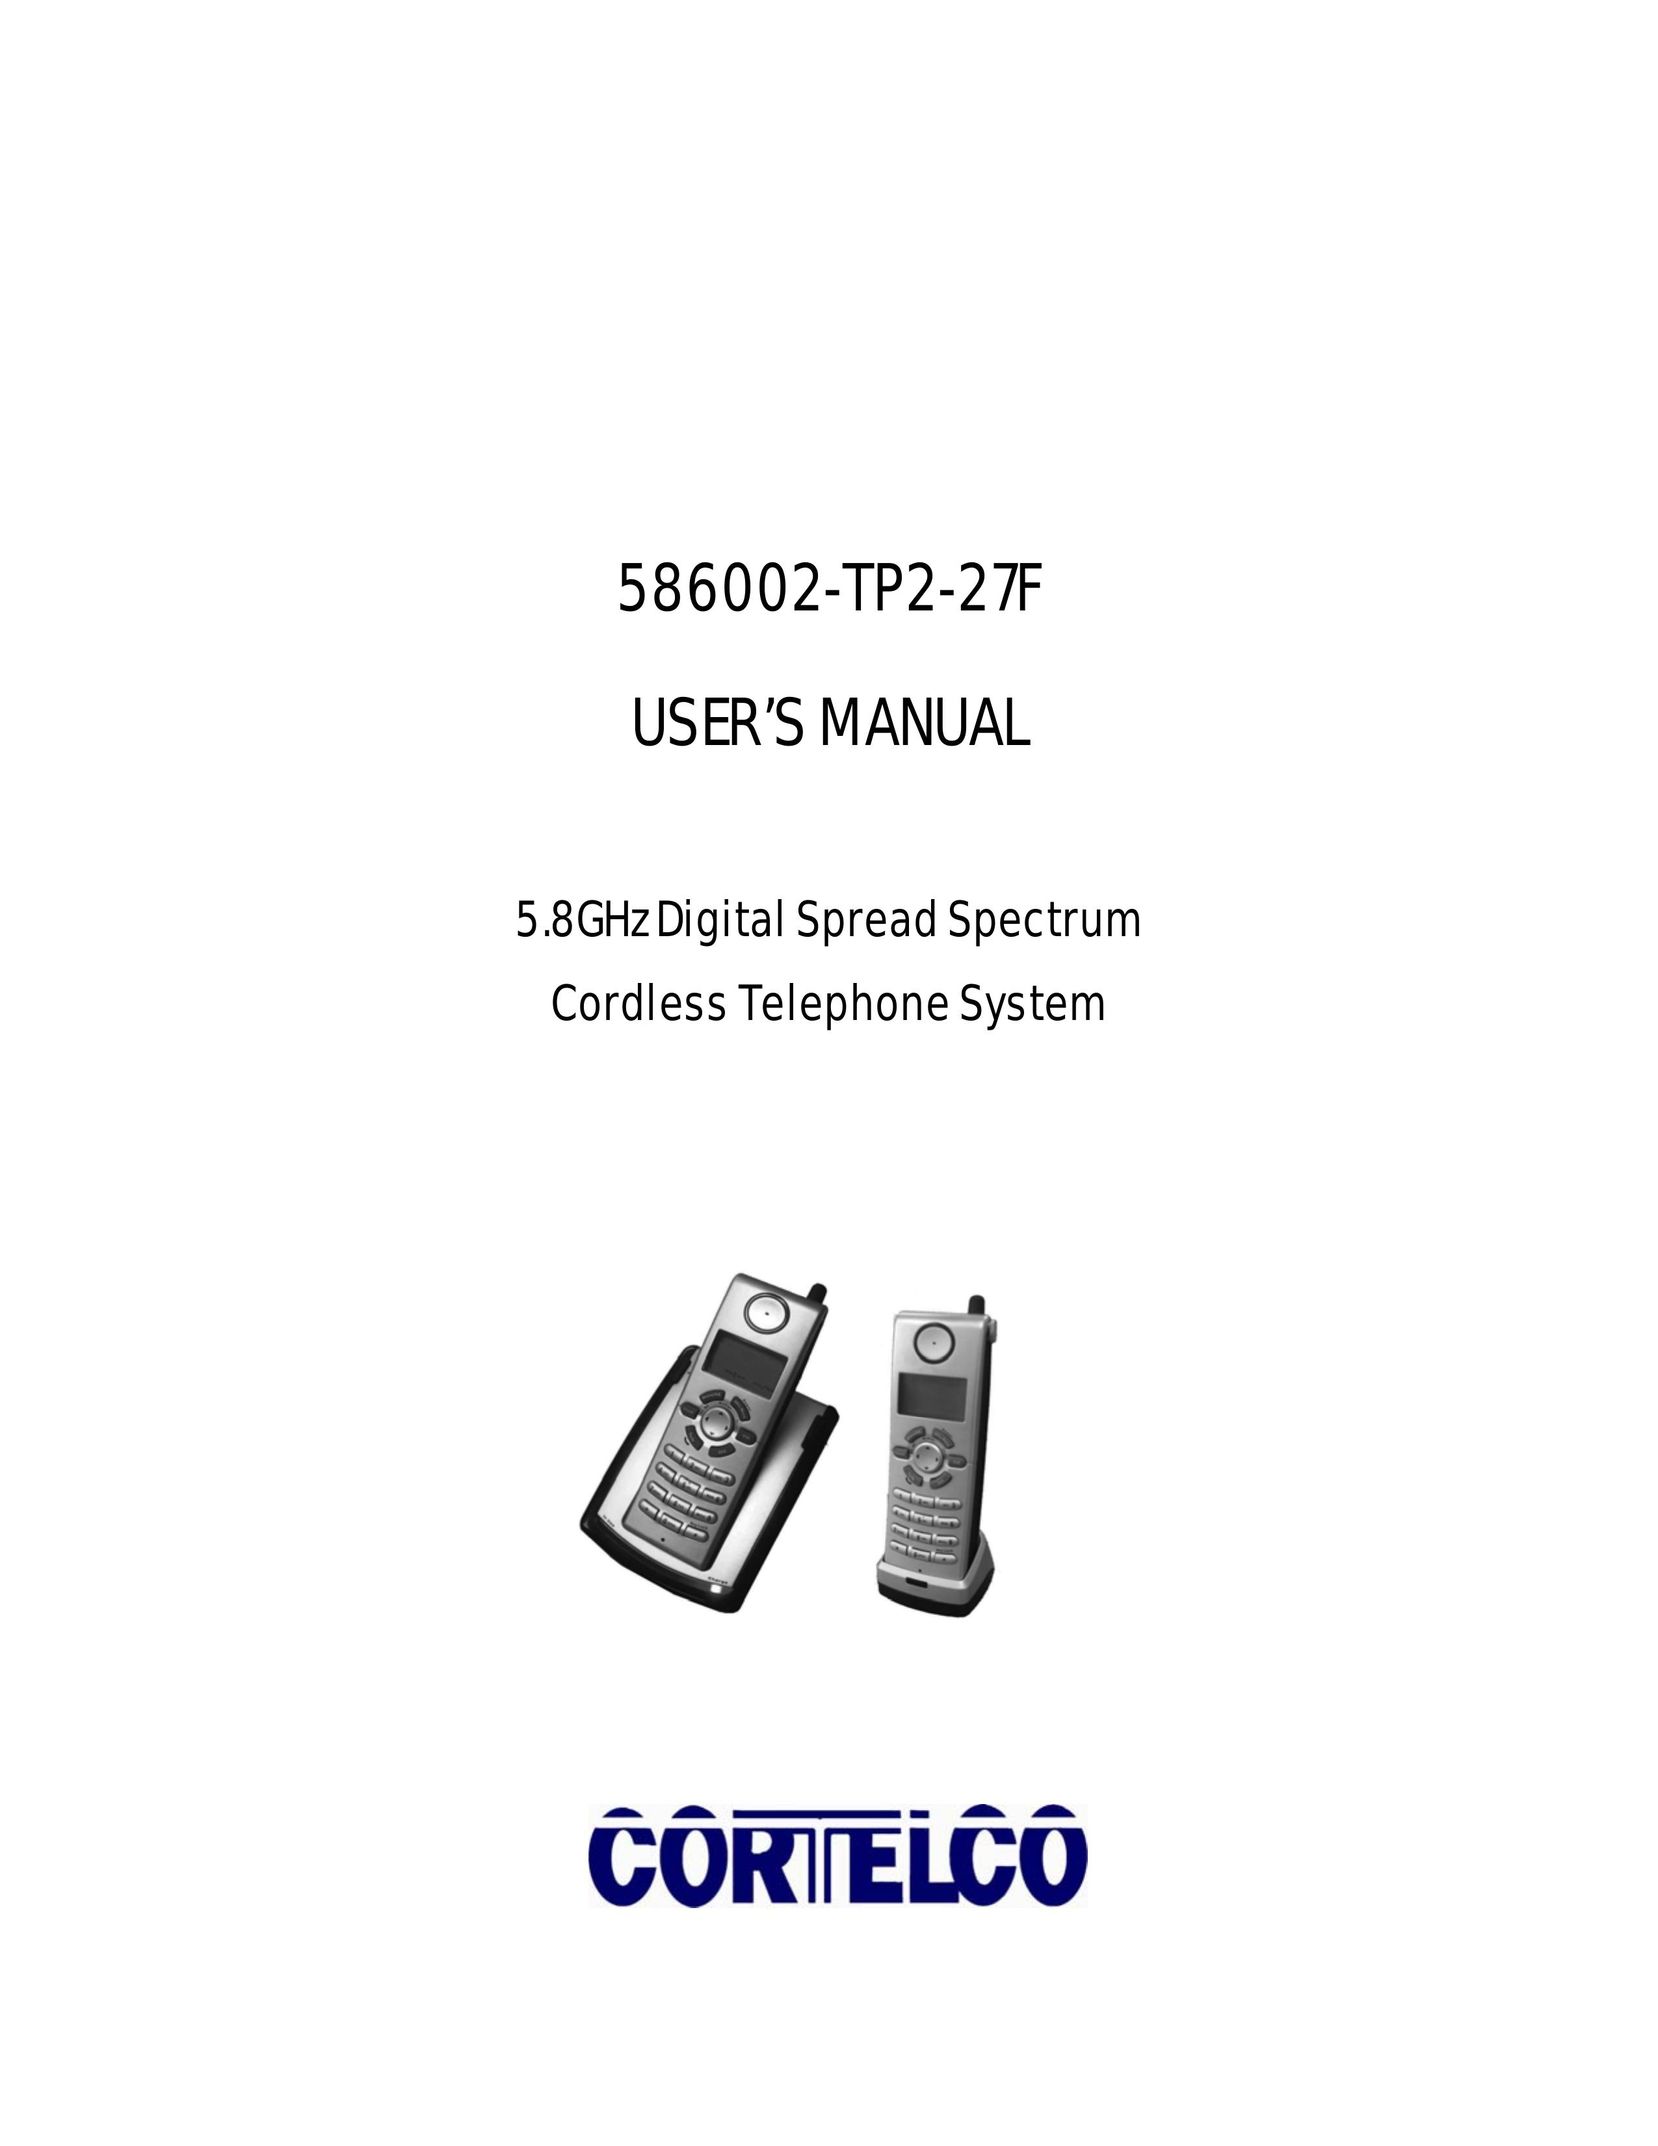 Cortelco 586002-TP2-27F Cordless Telephone User Manual